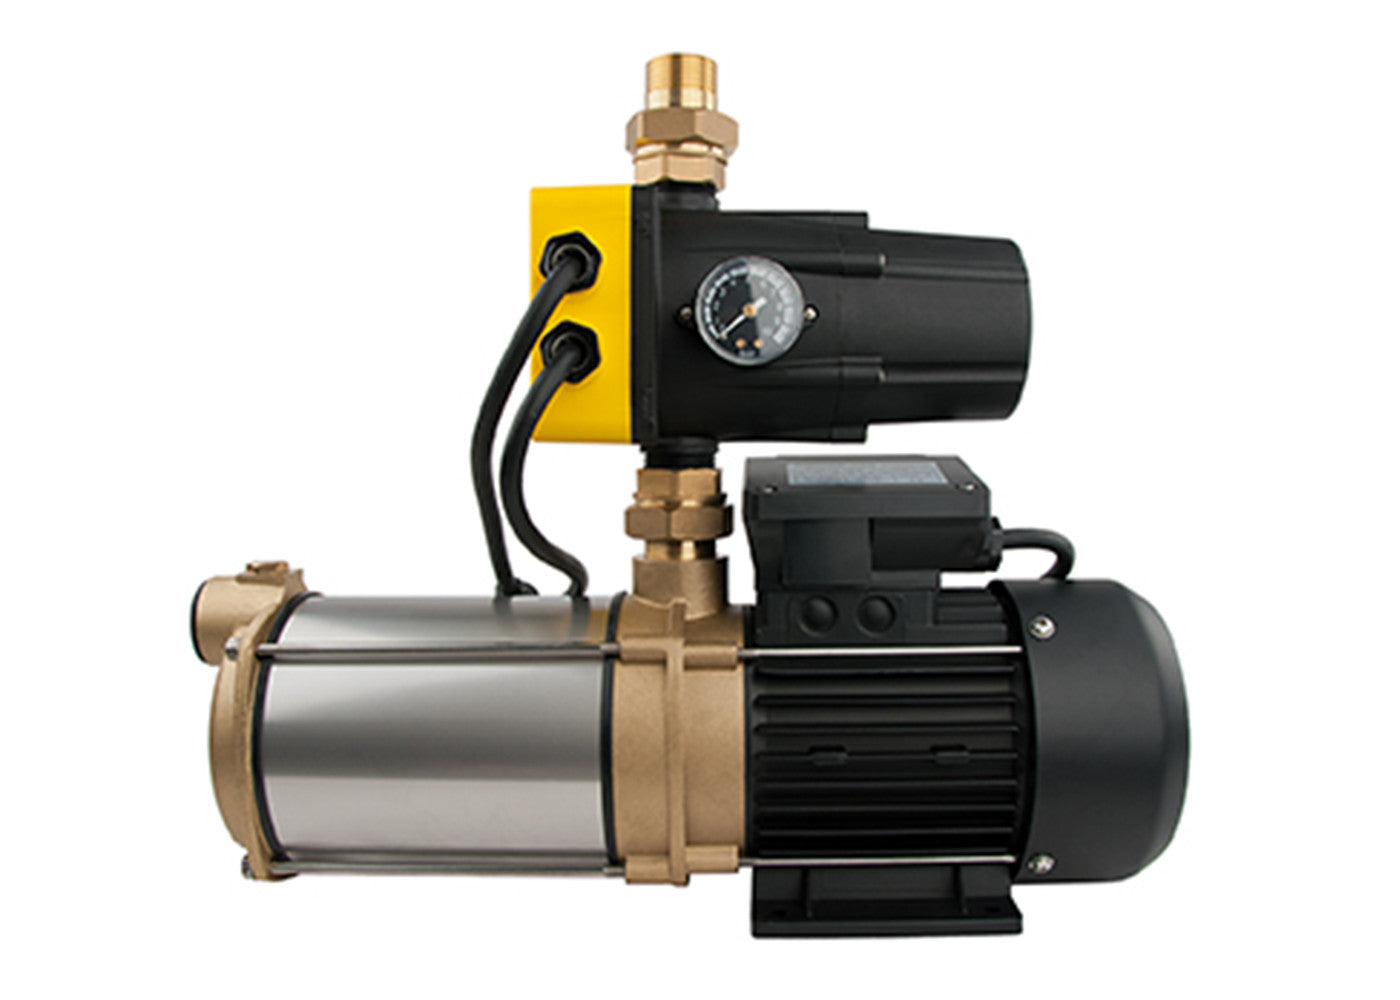 Hauswasserautomat CPS 15-6MB/Kit 05 OPTIMATIC pro für das Haus